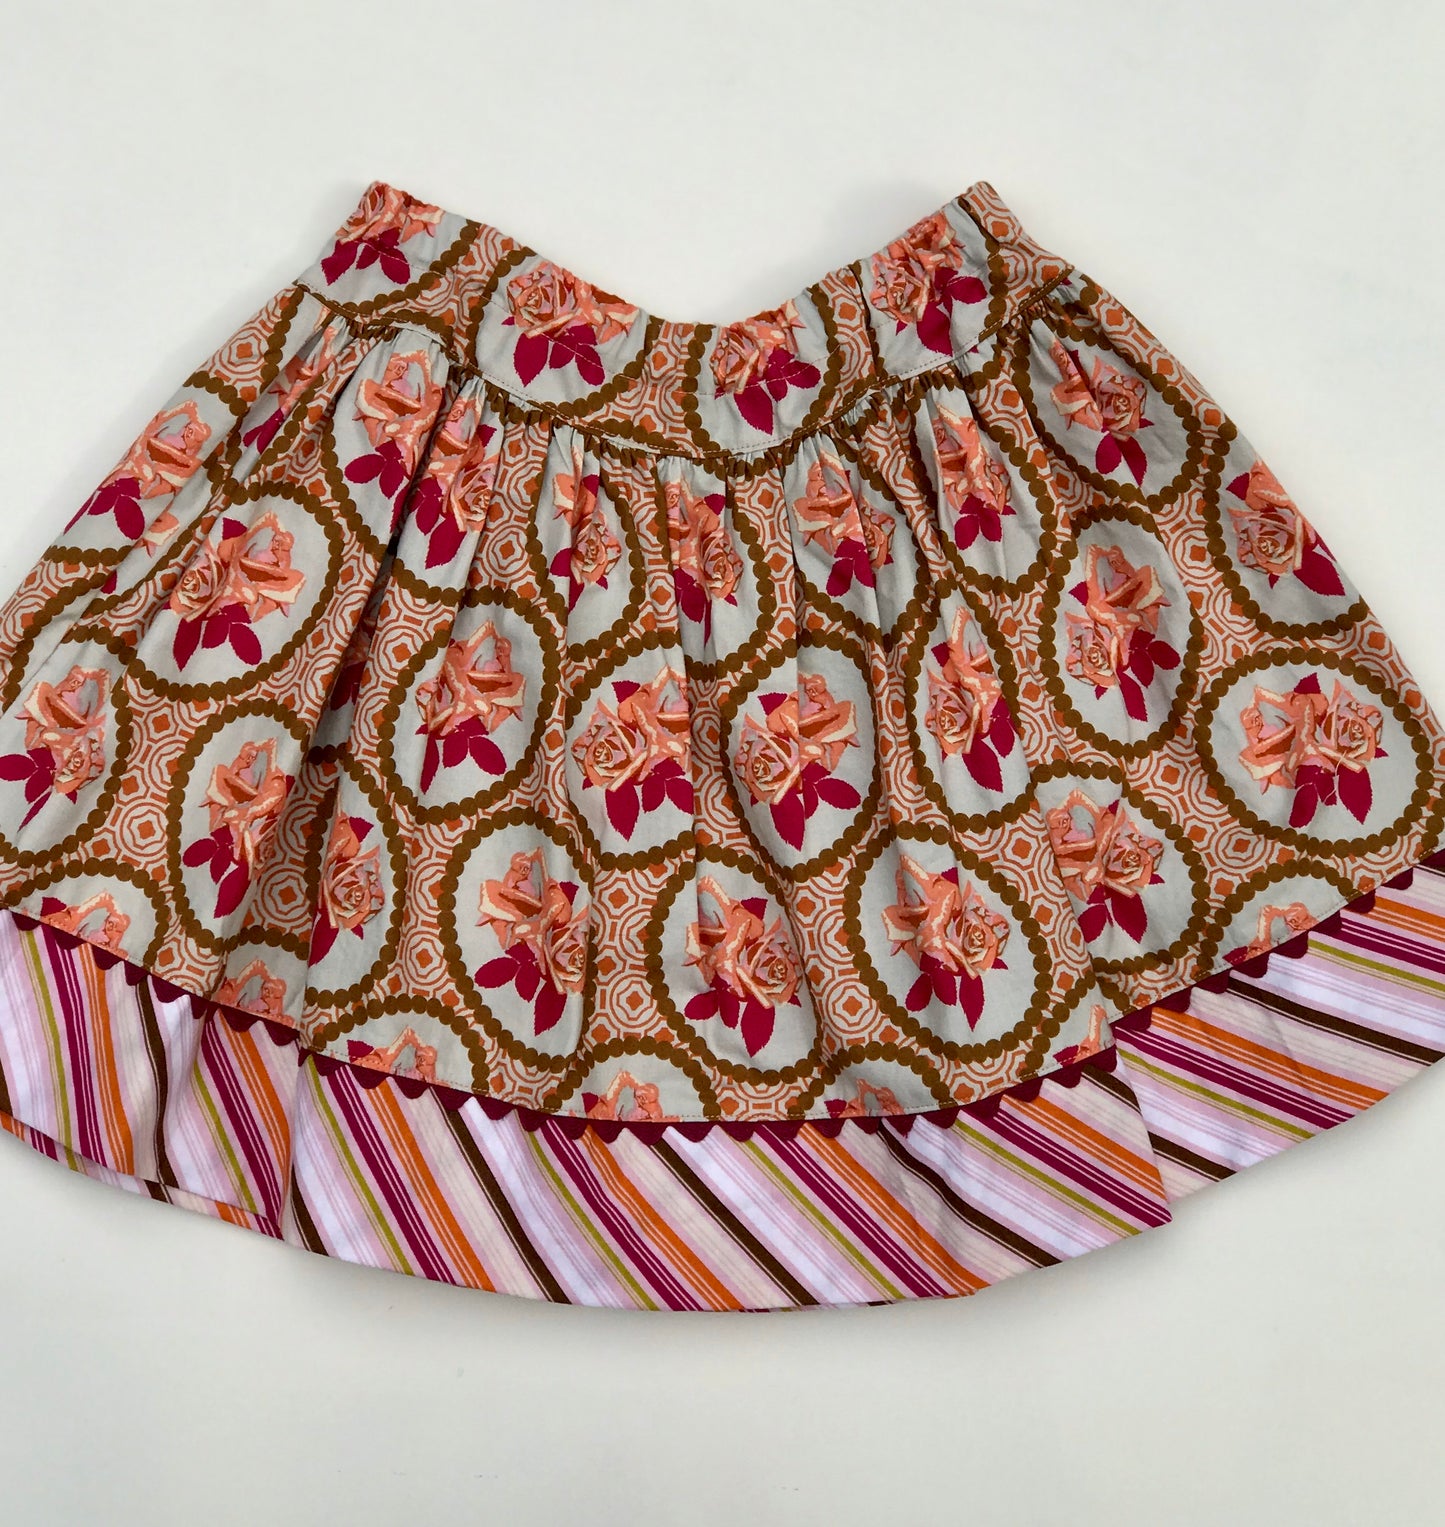 favorite twirl skirt in fall garden portrait - little girl Pearl